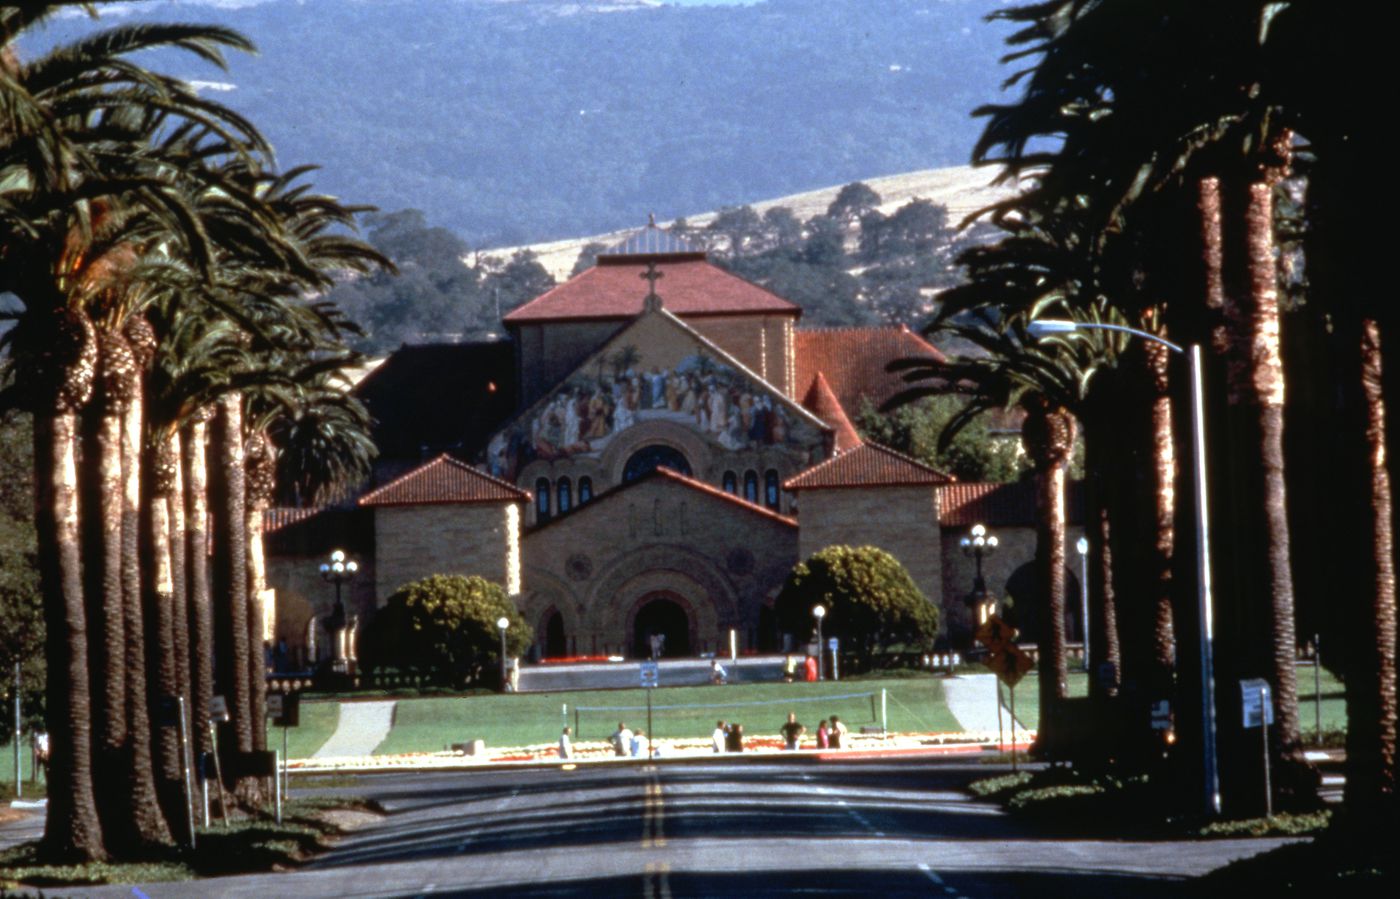 Photograph of church (possibly Stanford Memorial Church) for research for Olmsted: L'origine del parco urbano e del parco naturale contemporaneo